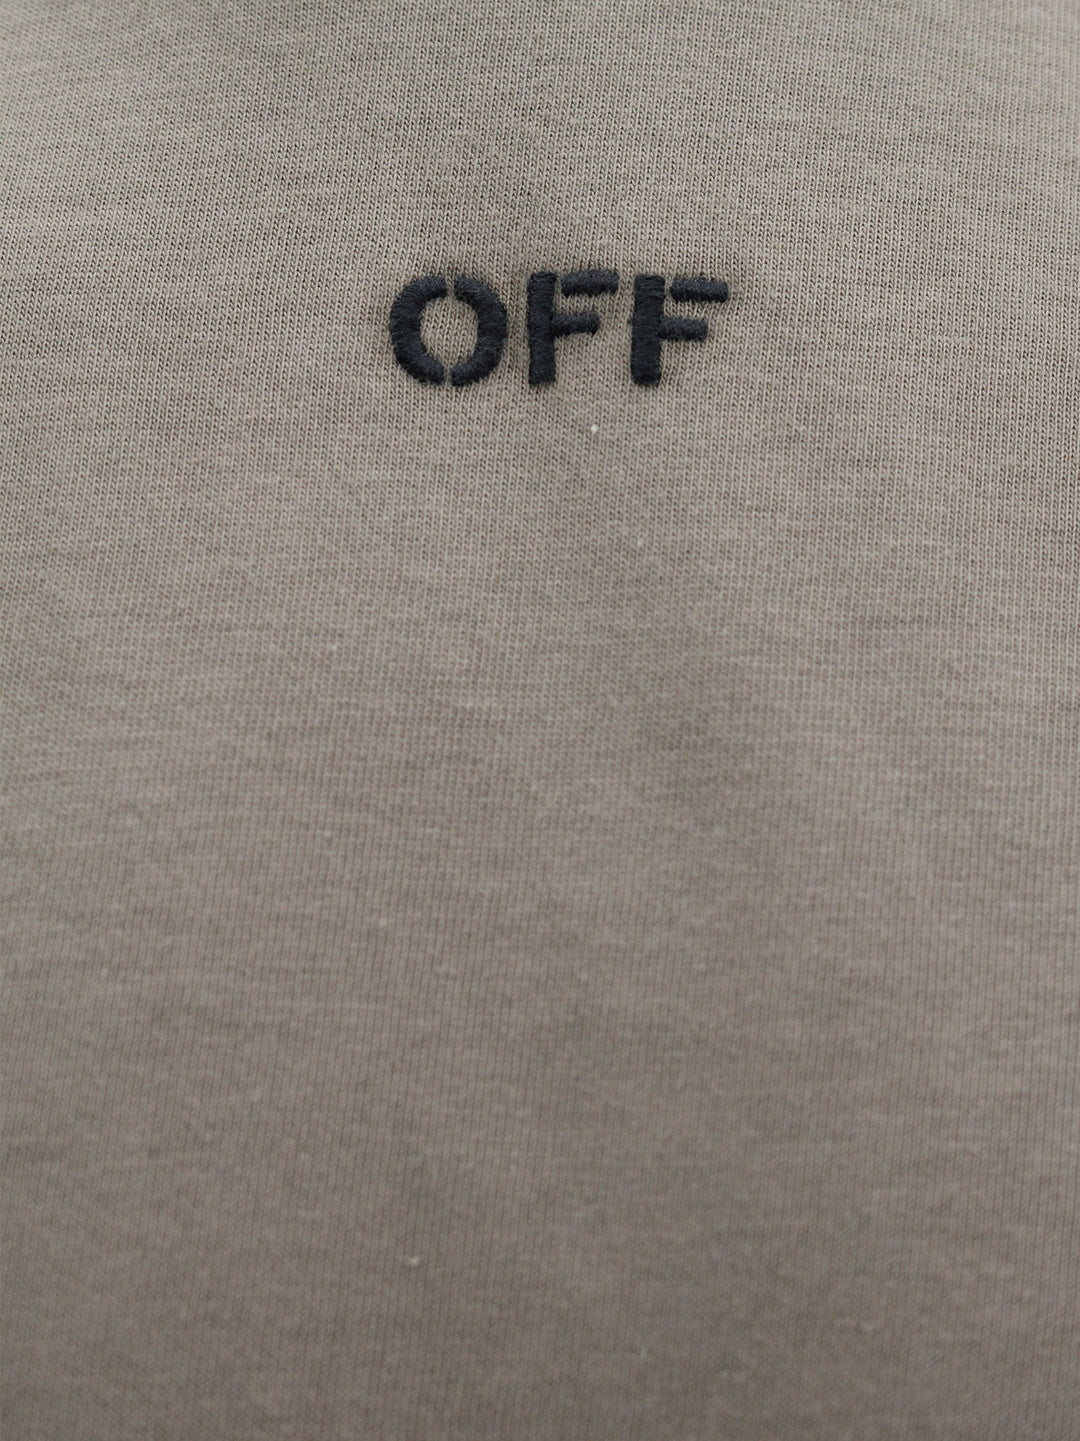 T-shirt in cotone con stampa logo